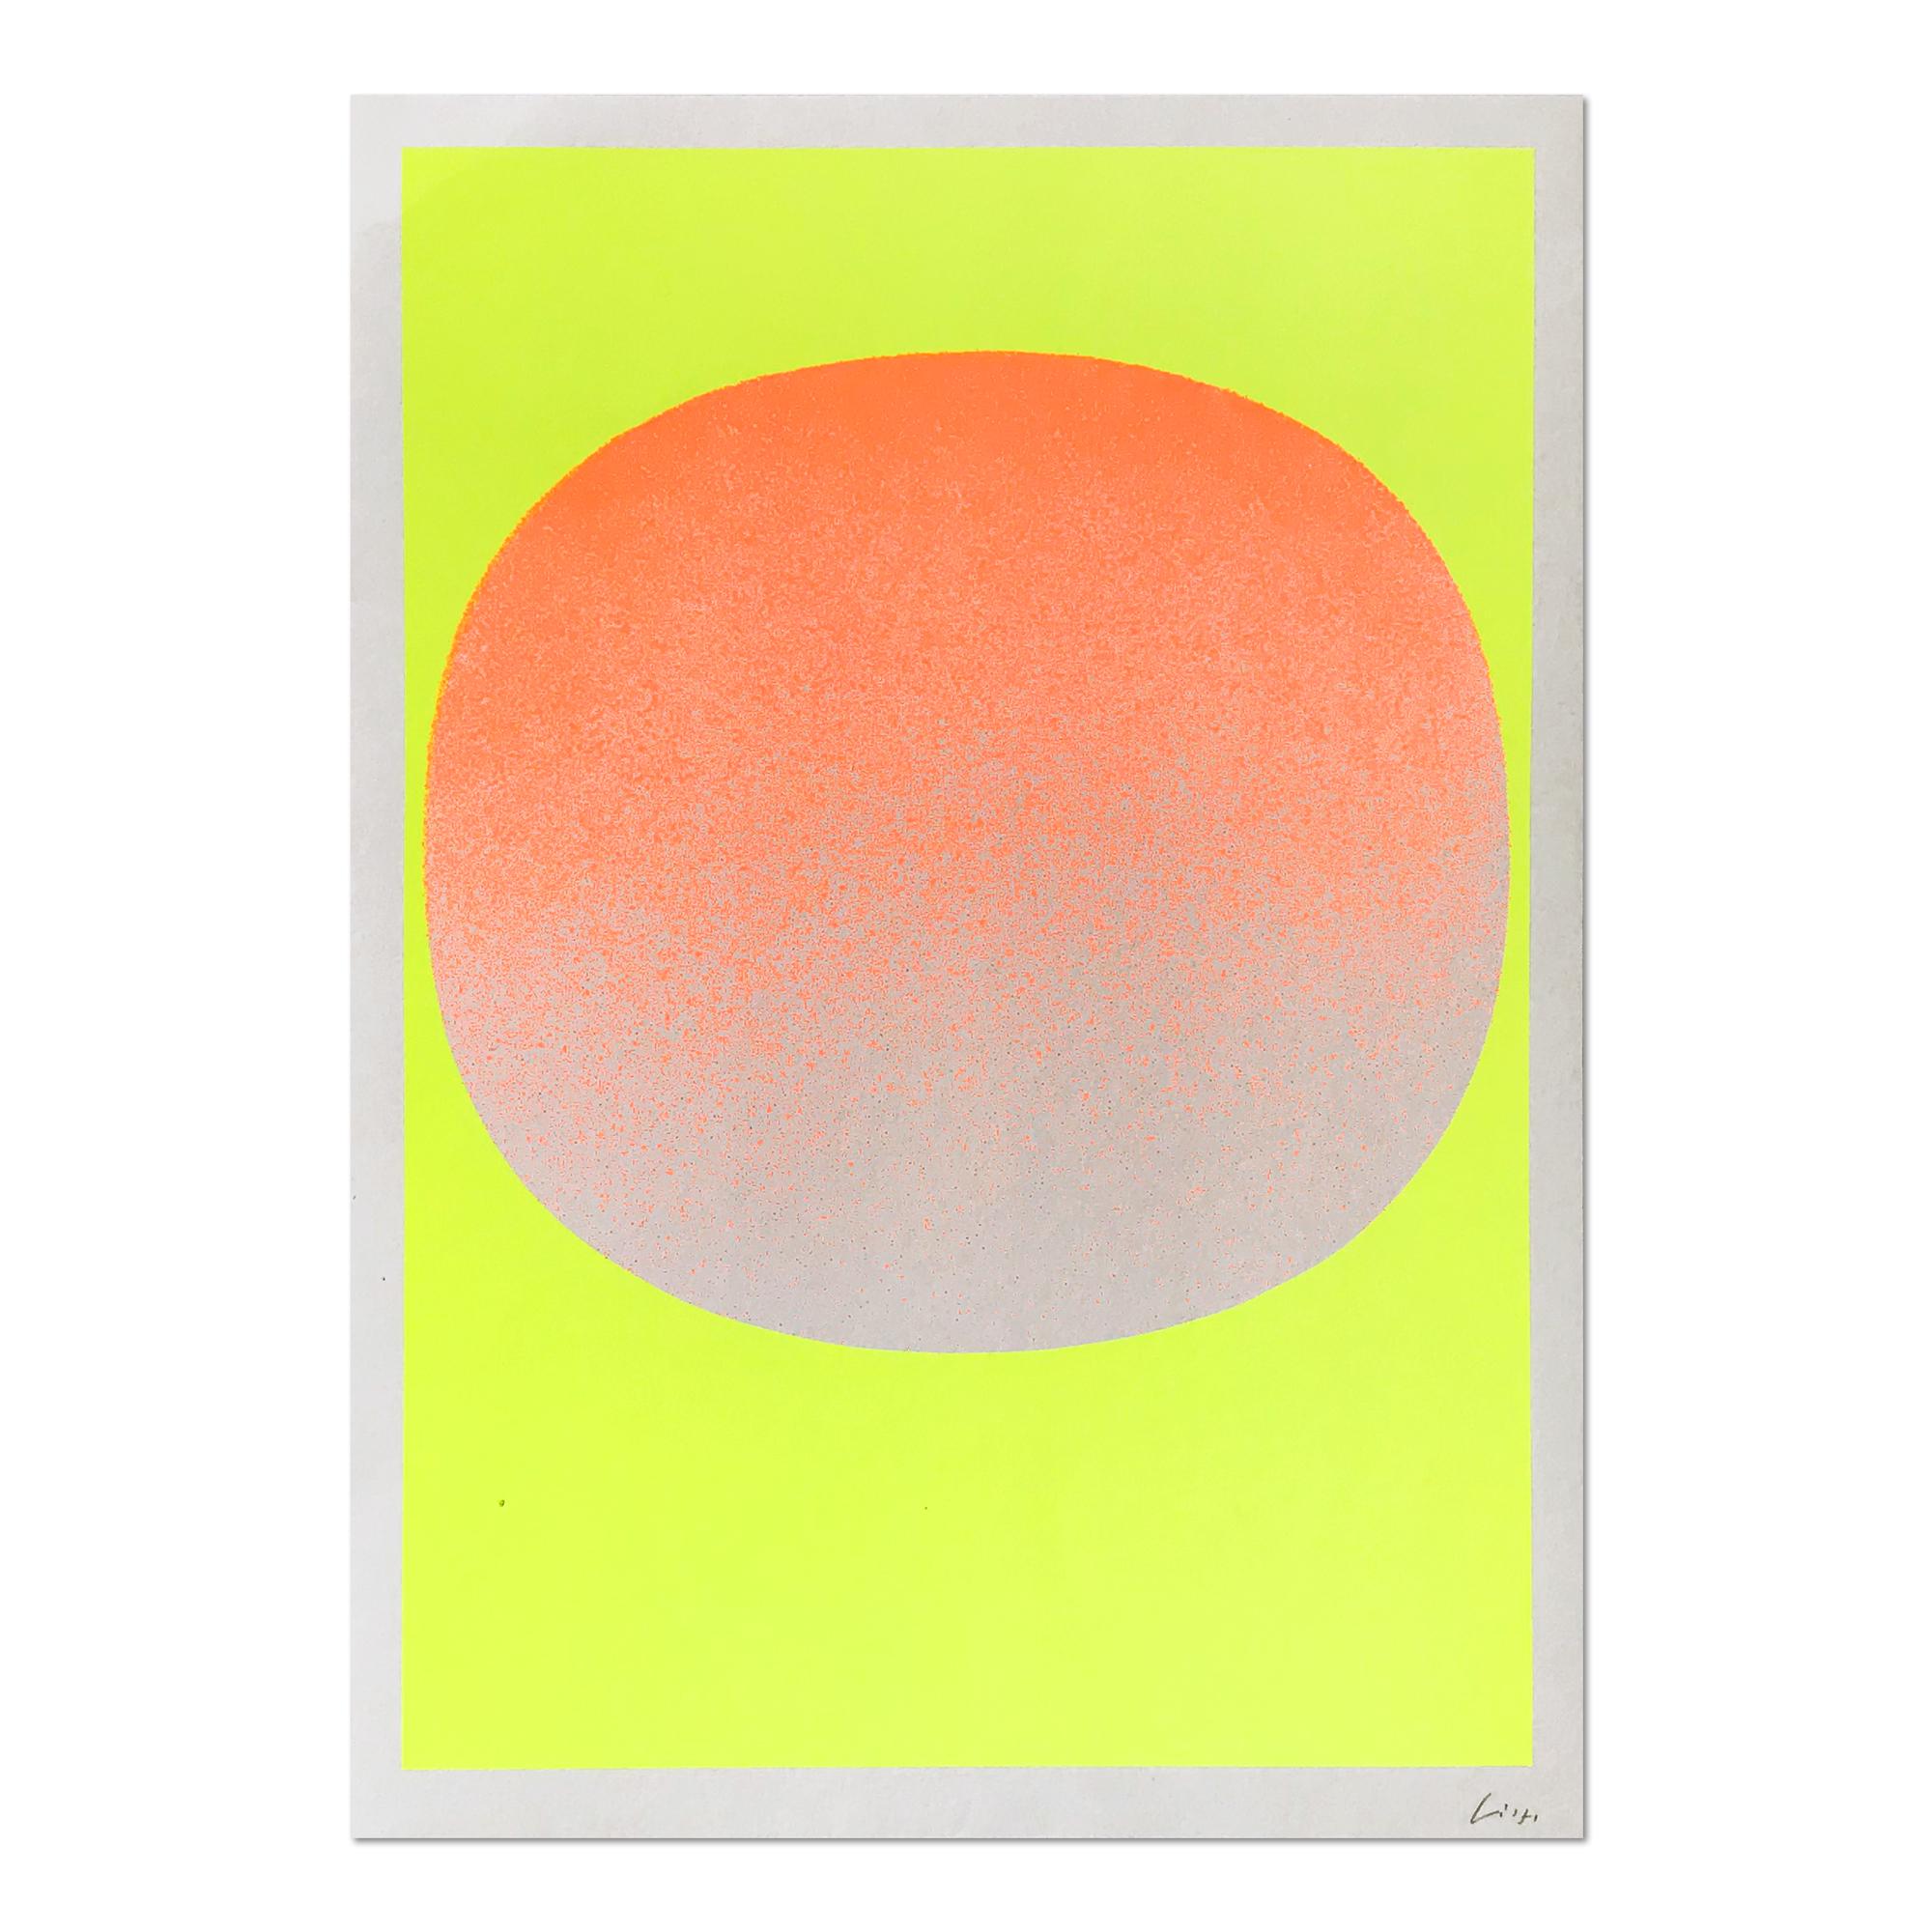 Rupprecht Geiger Abstract Drawing - Orange on Yellow, Screenprint, Abstract Art, 20th Century, Minimalism